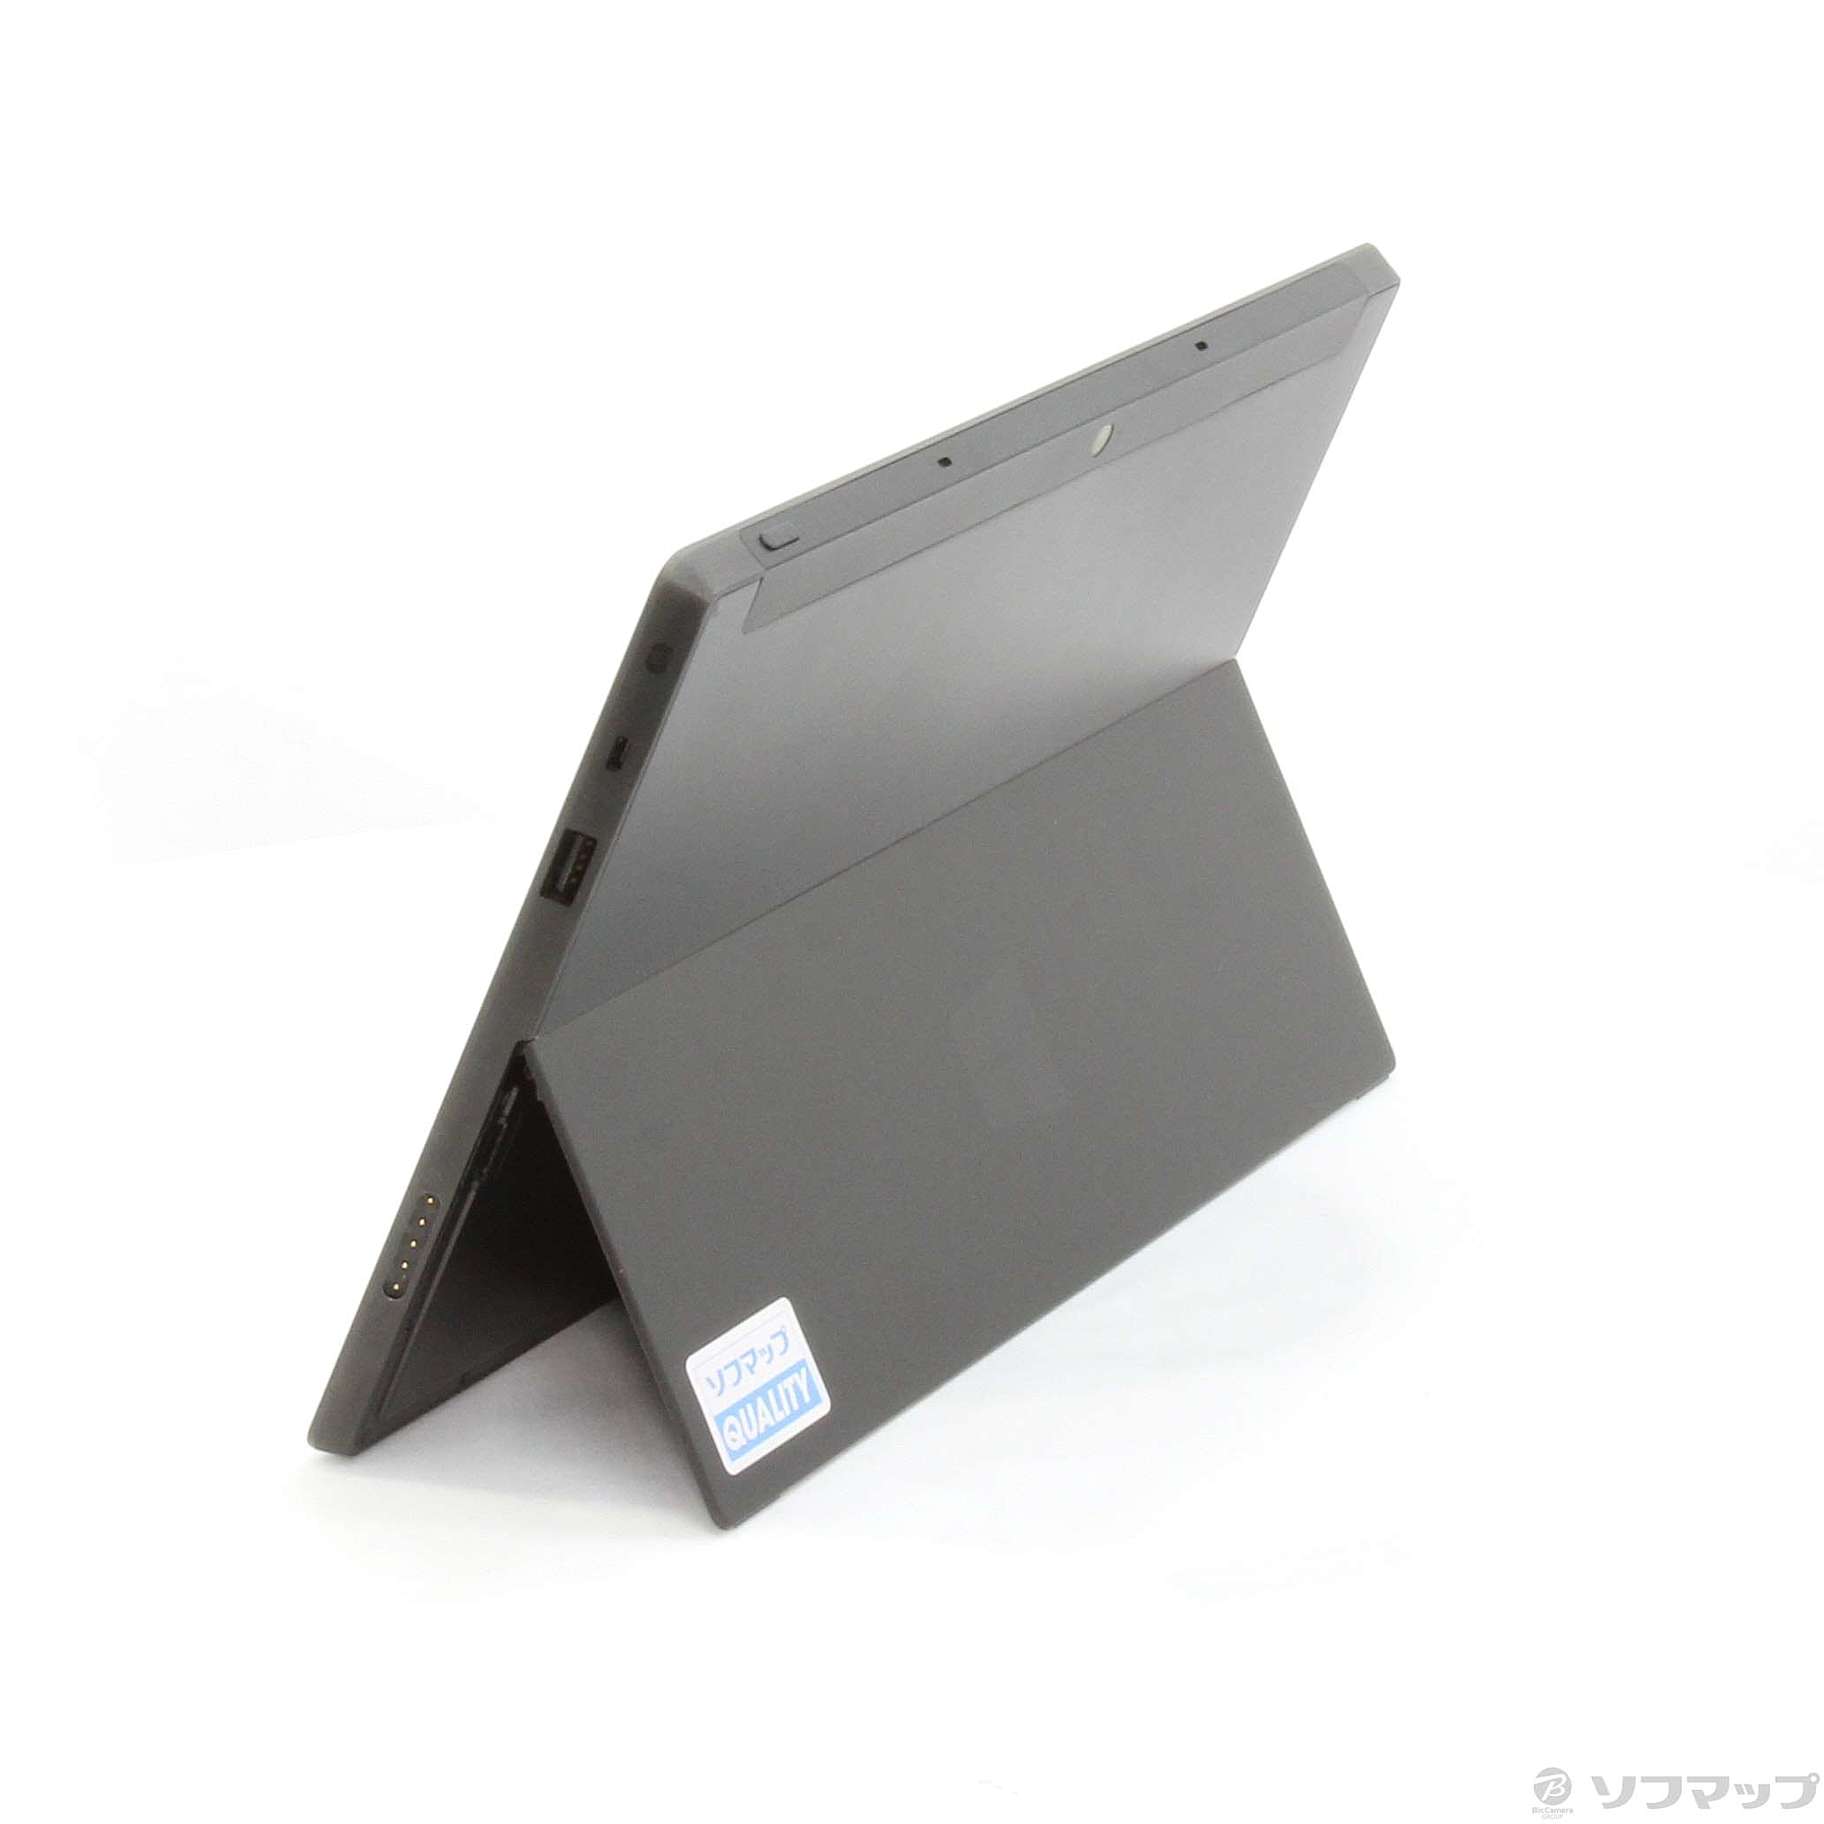 Surface RT 32GB ブラック 7XR-00030 Wi-Fi